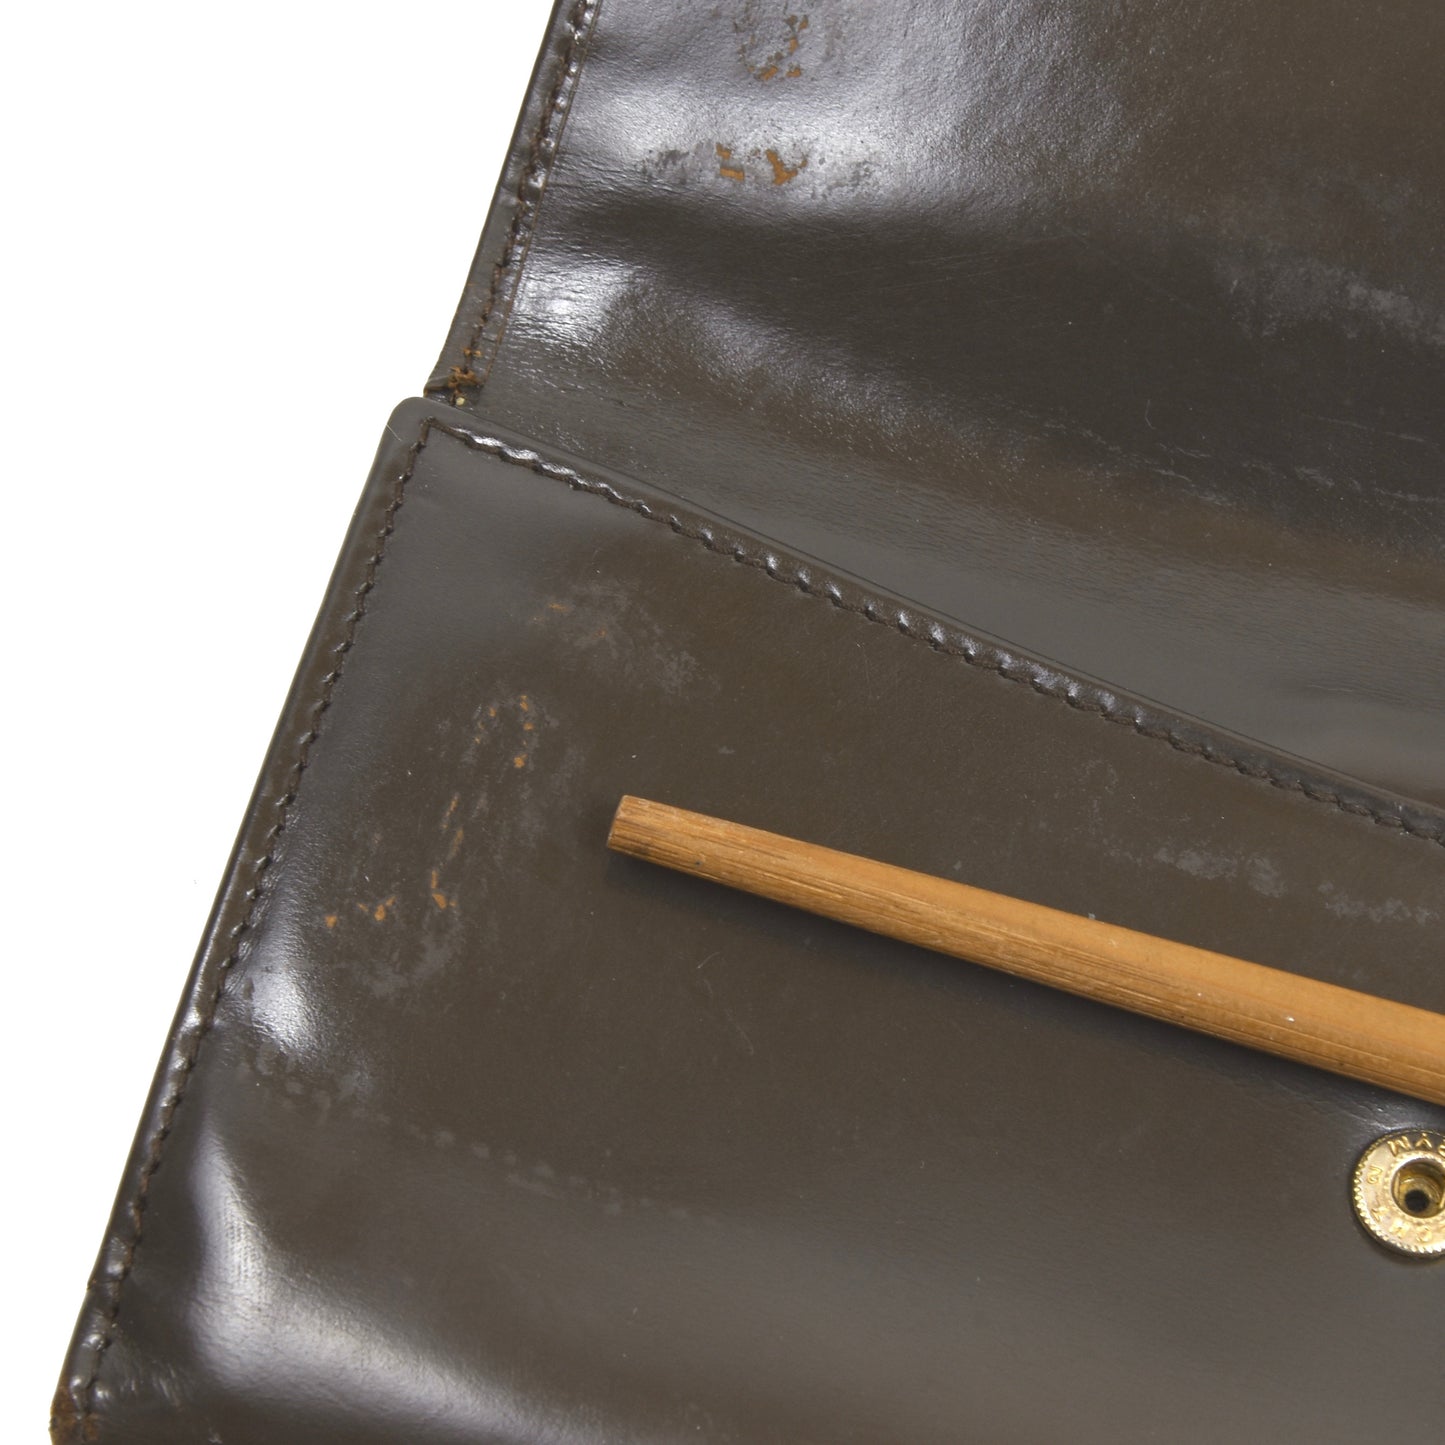 Vintage Gucci Long Leather Wallet - Tan/Brown